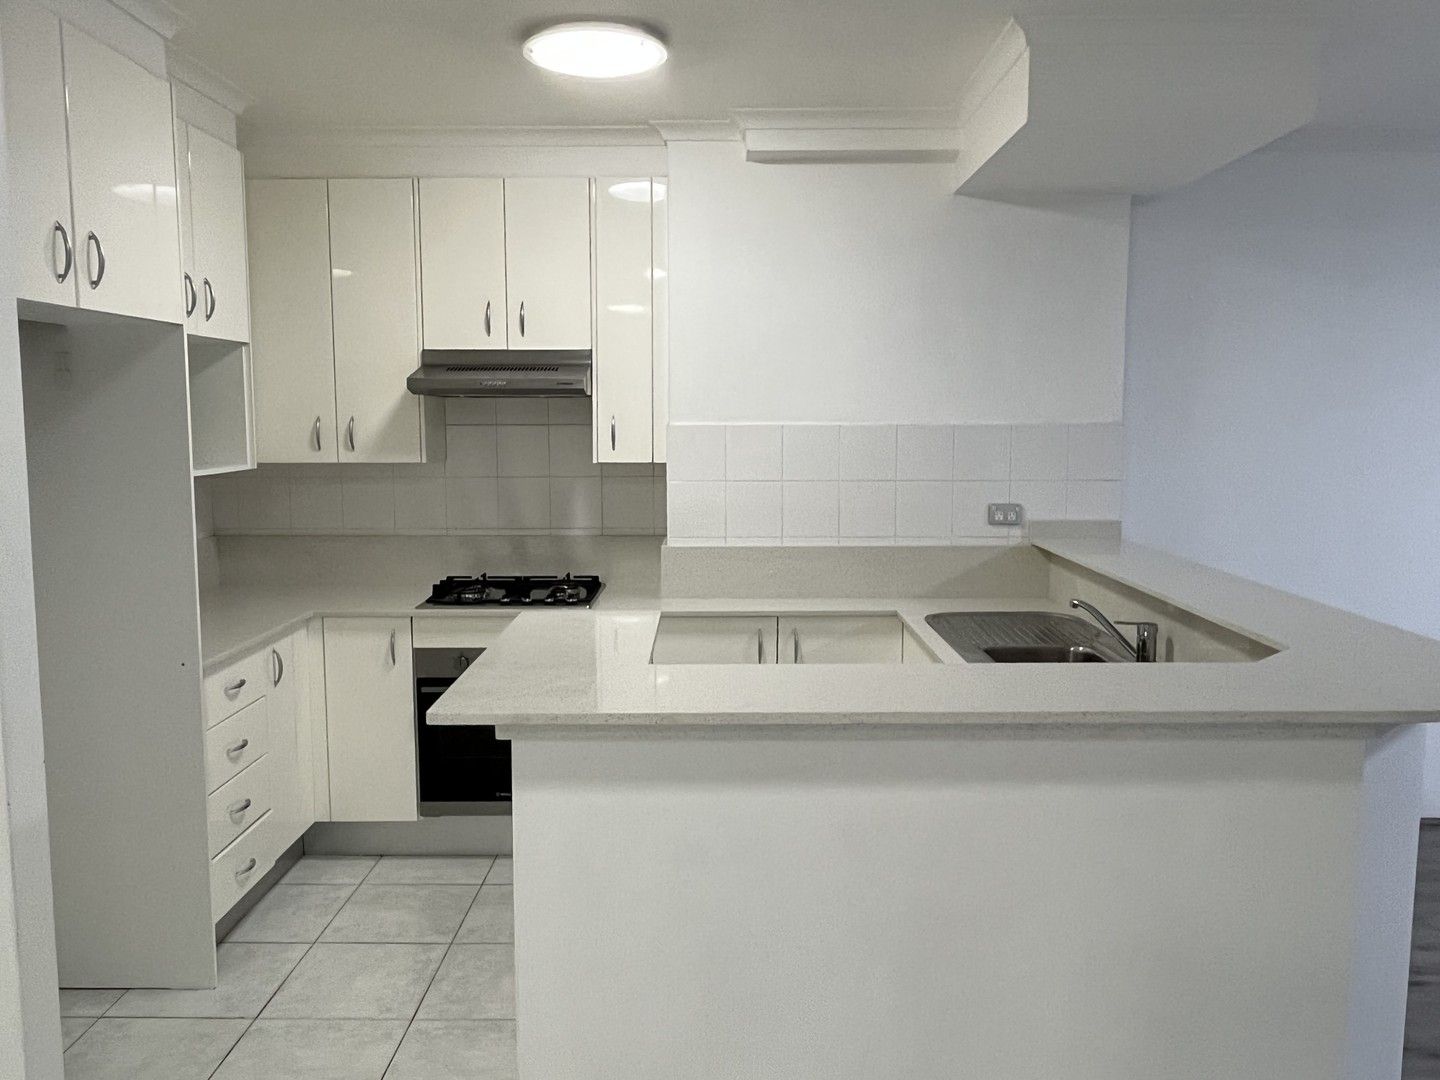 2 bedrooms Apartment / Unit / Flat in 28/2 Ashton Street ROCKDALE NSW, 2216